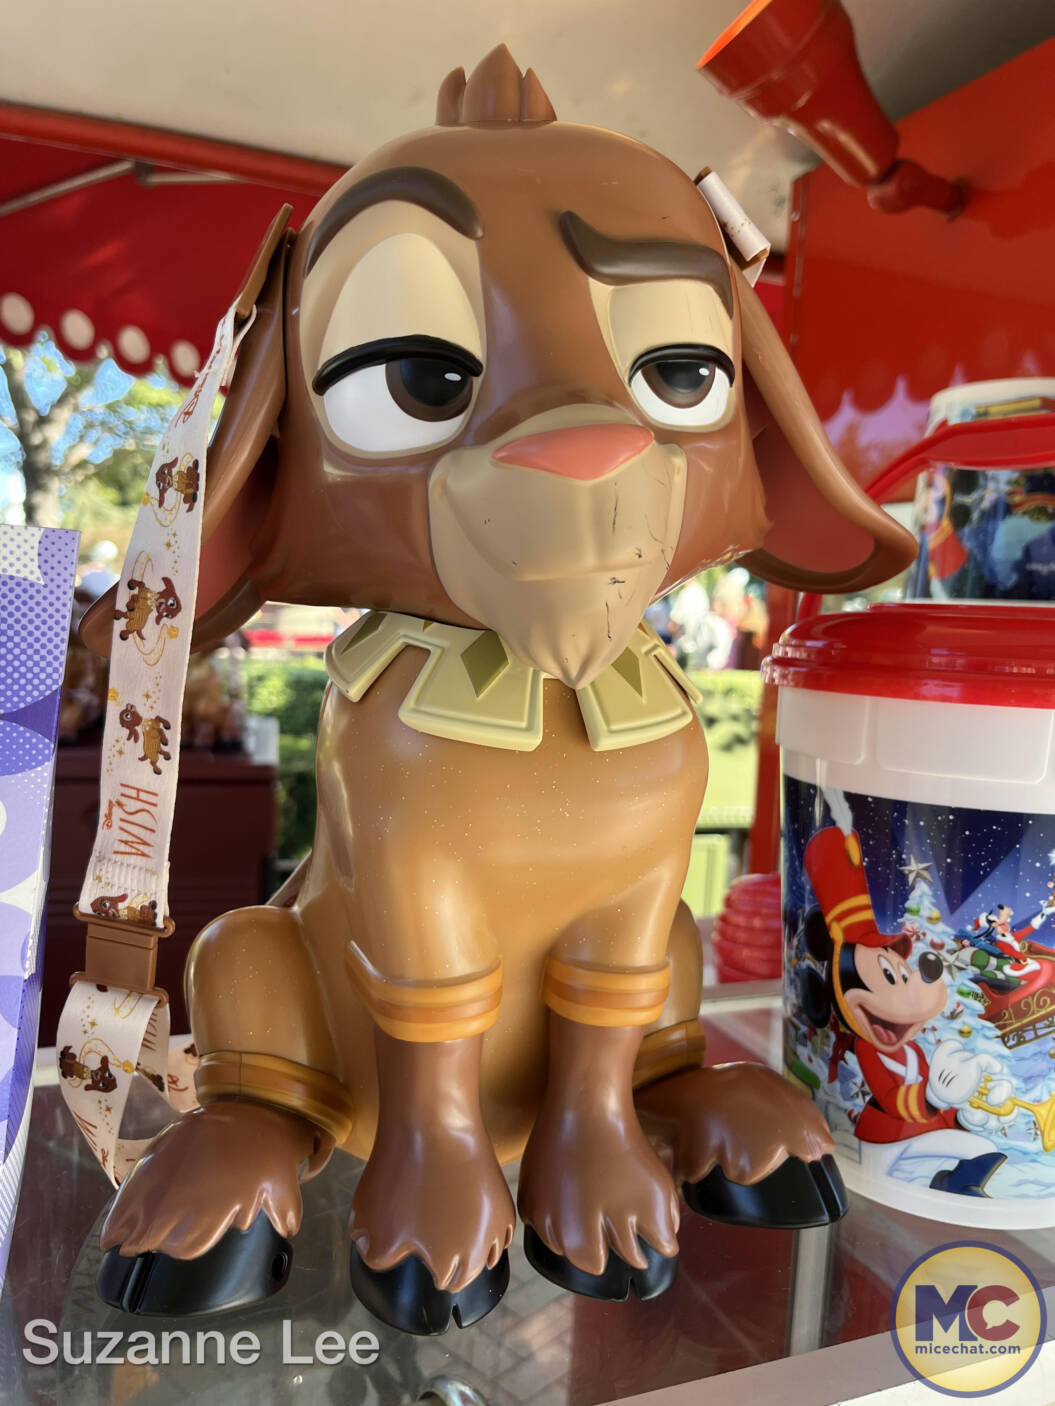 PHOTOS: 'Wish' Valentino Popcorn Bucket & Star Sipper Arrive at Disneyland  Resort - Disneyland News Today